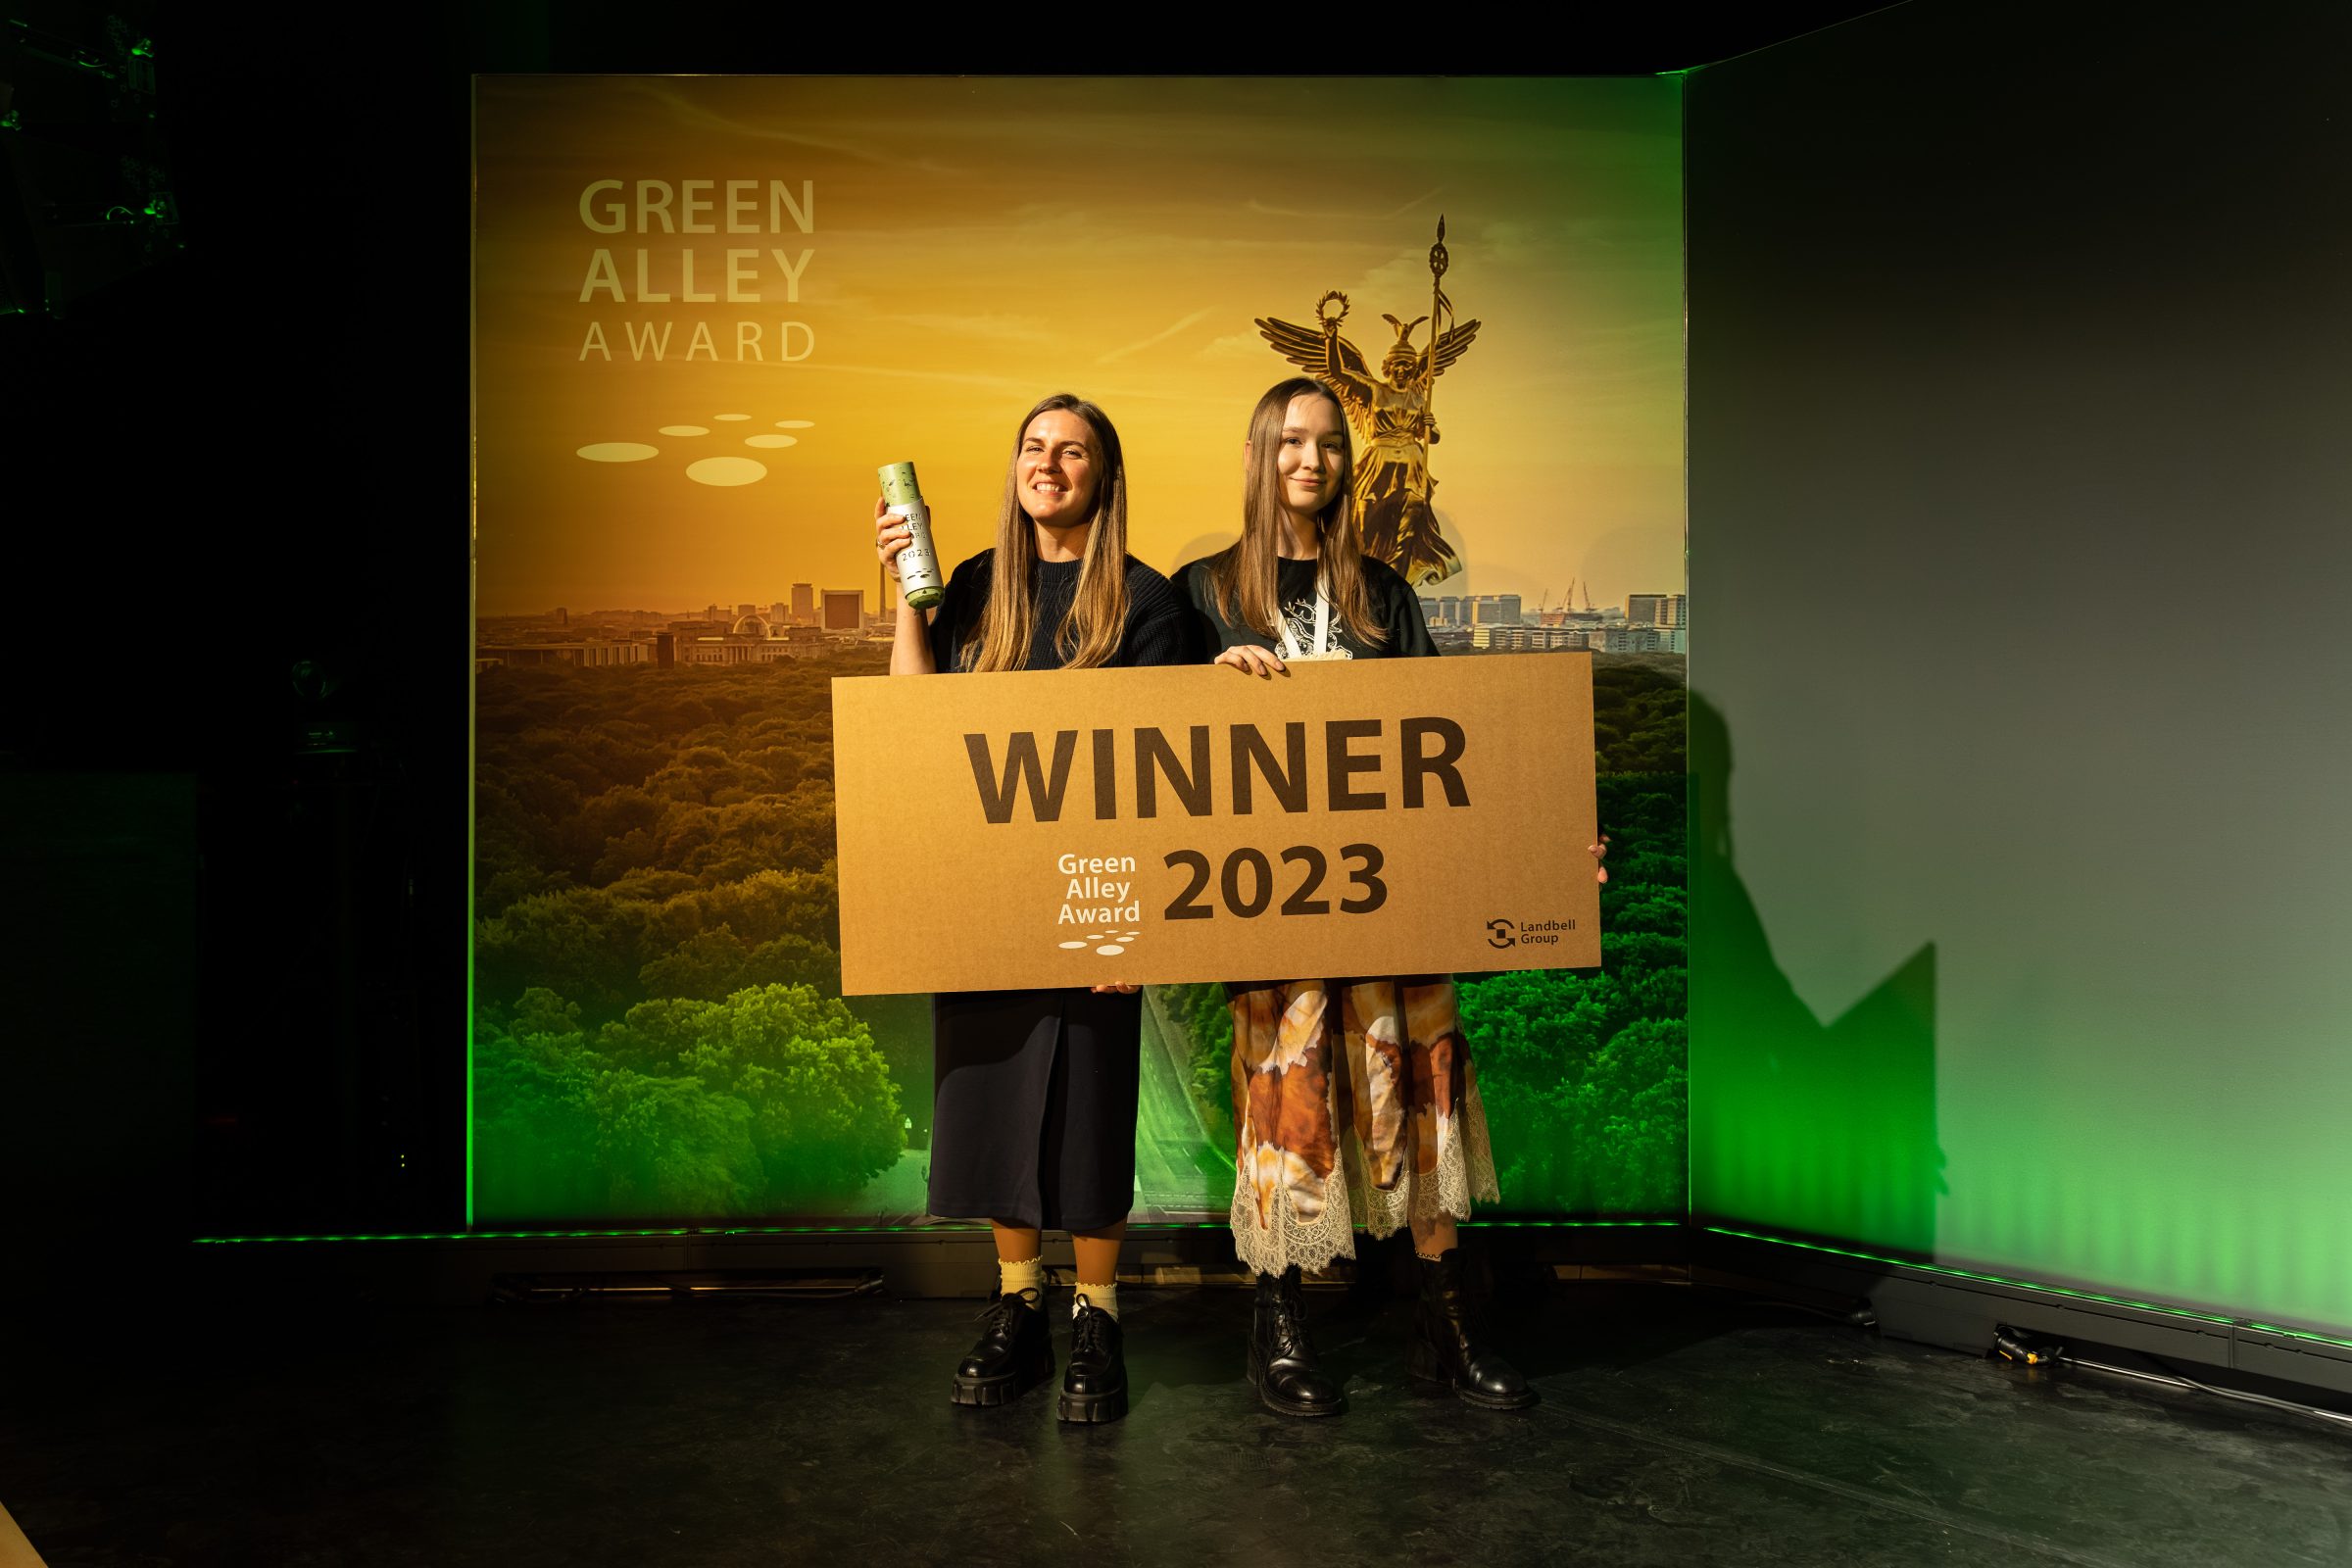 Green Alley Award 2023